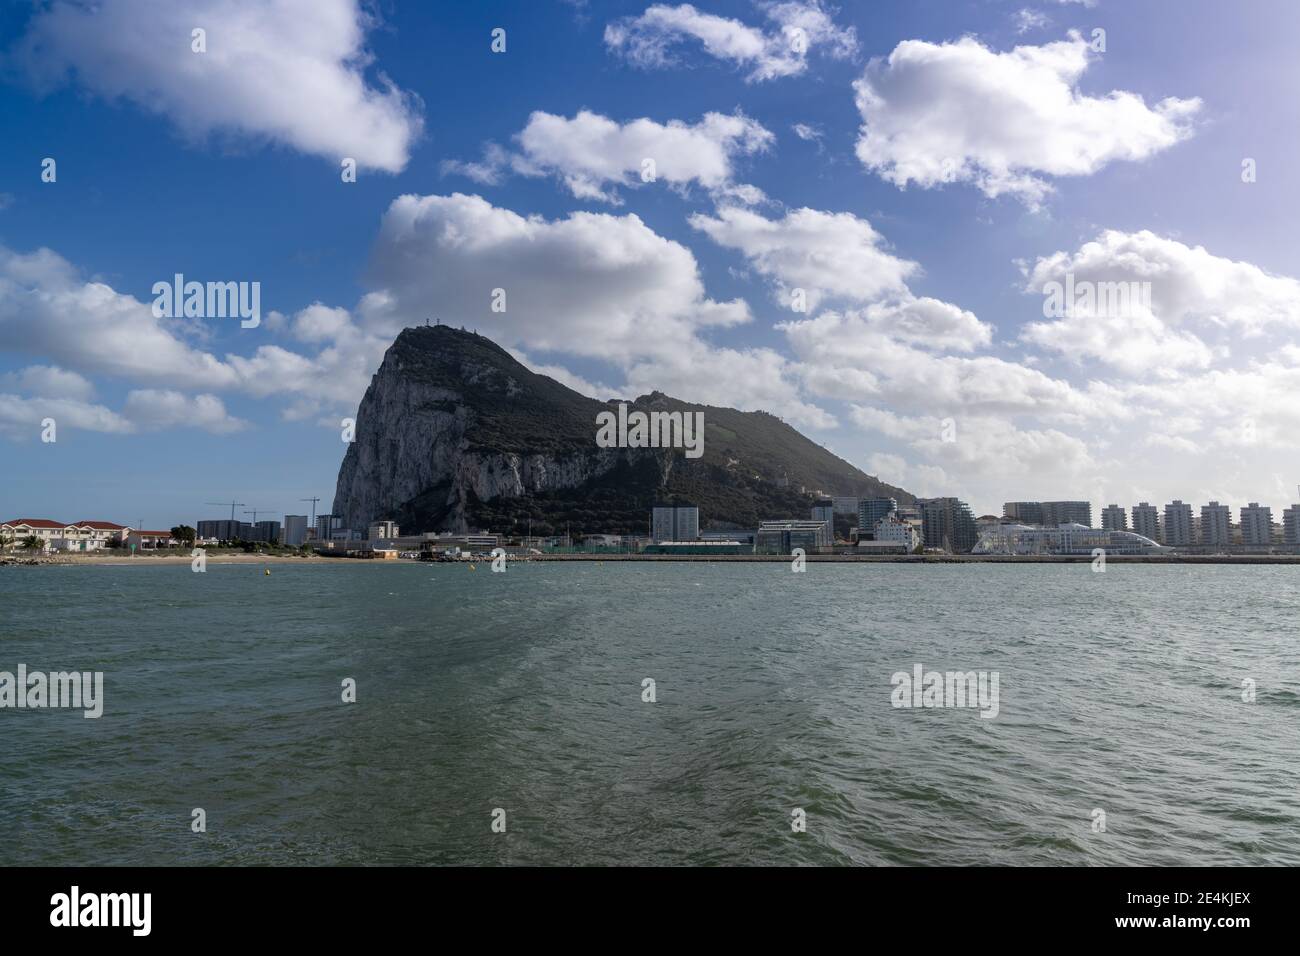 La Linea de la Concepcion, Spain - 22 January 2020: view of the Alcaldesa Marina and the Rock of Gibraltar Stock Photo